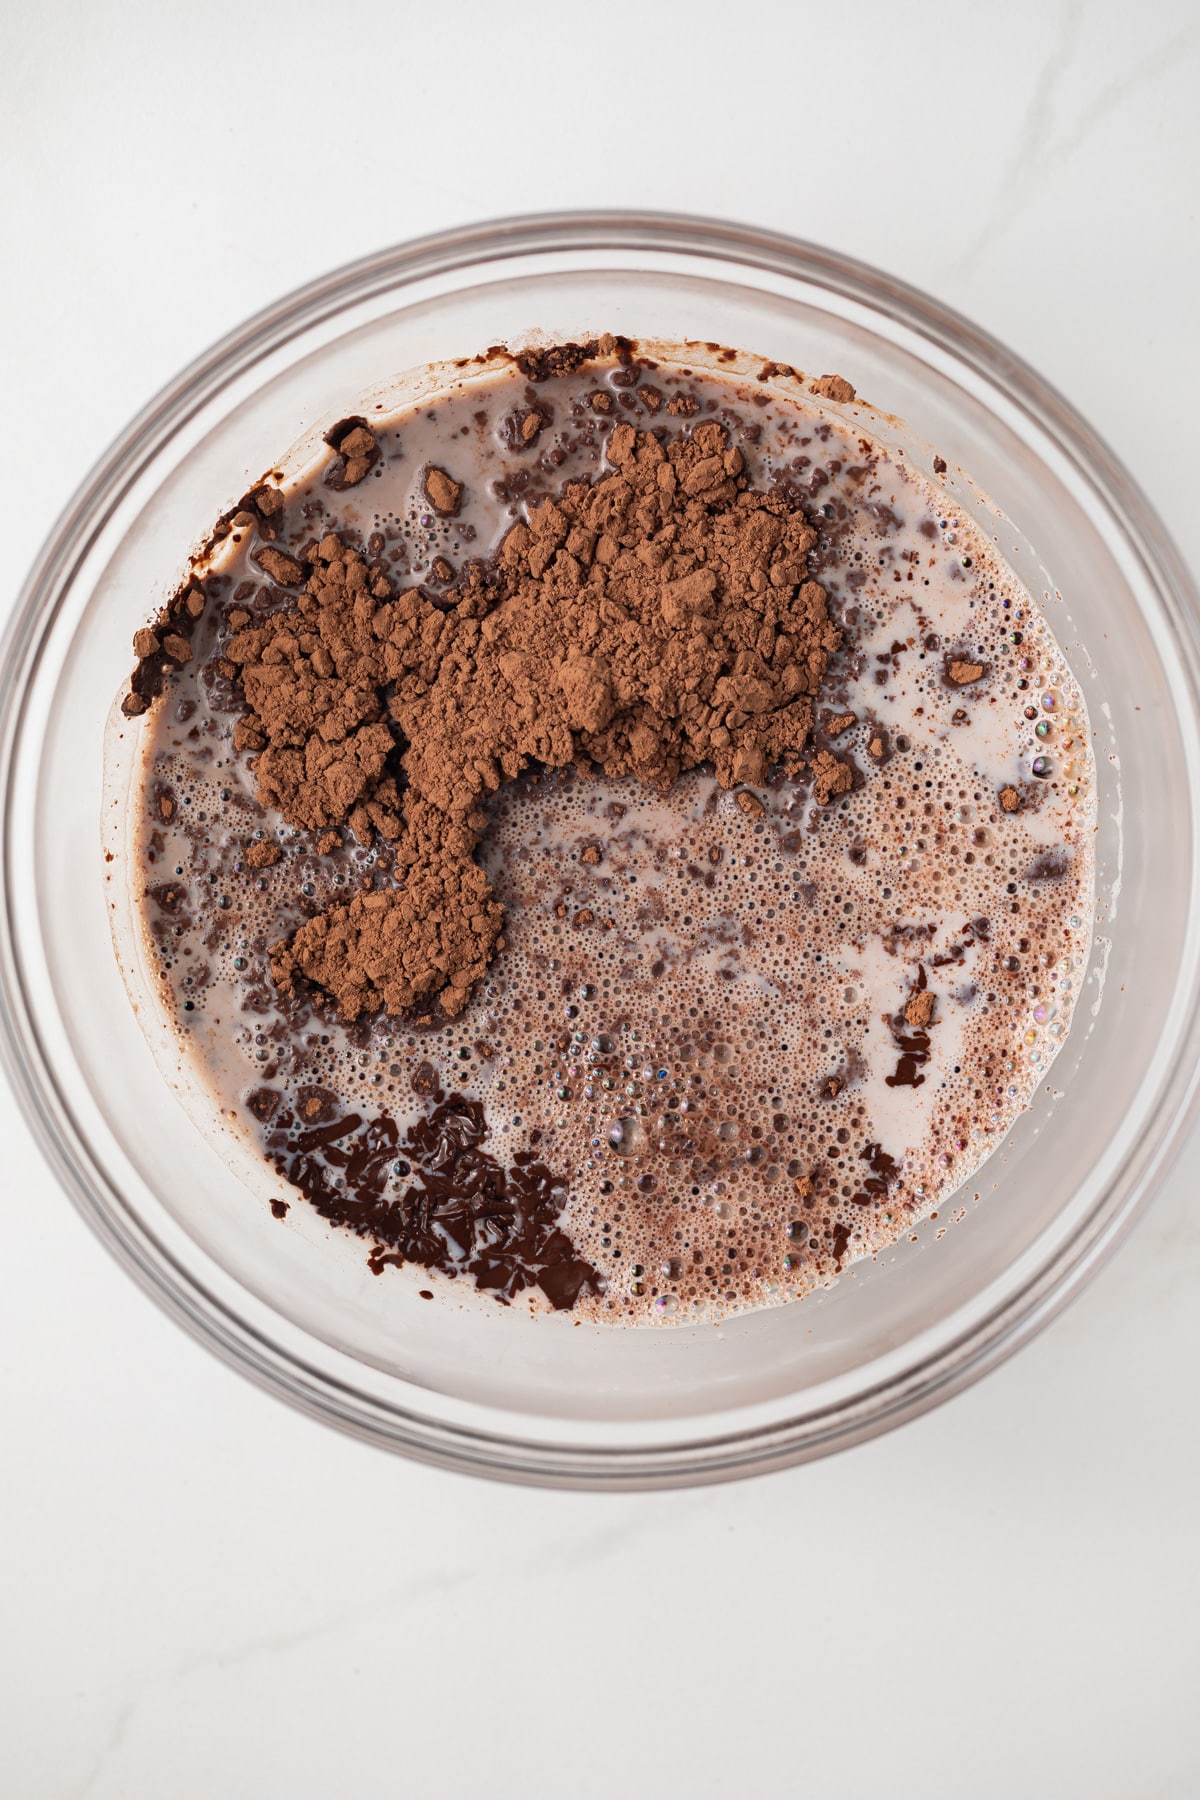 Chocolate, cocoa powder, and cream in glass bowl.